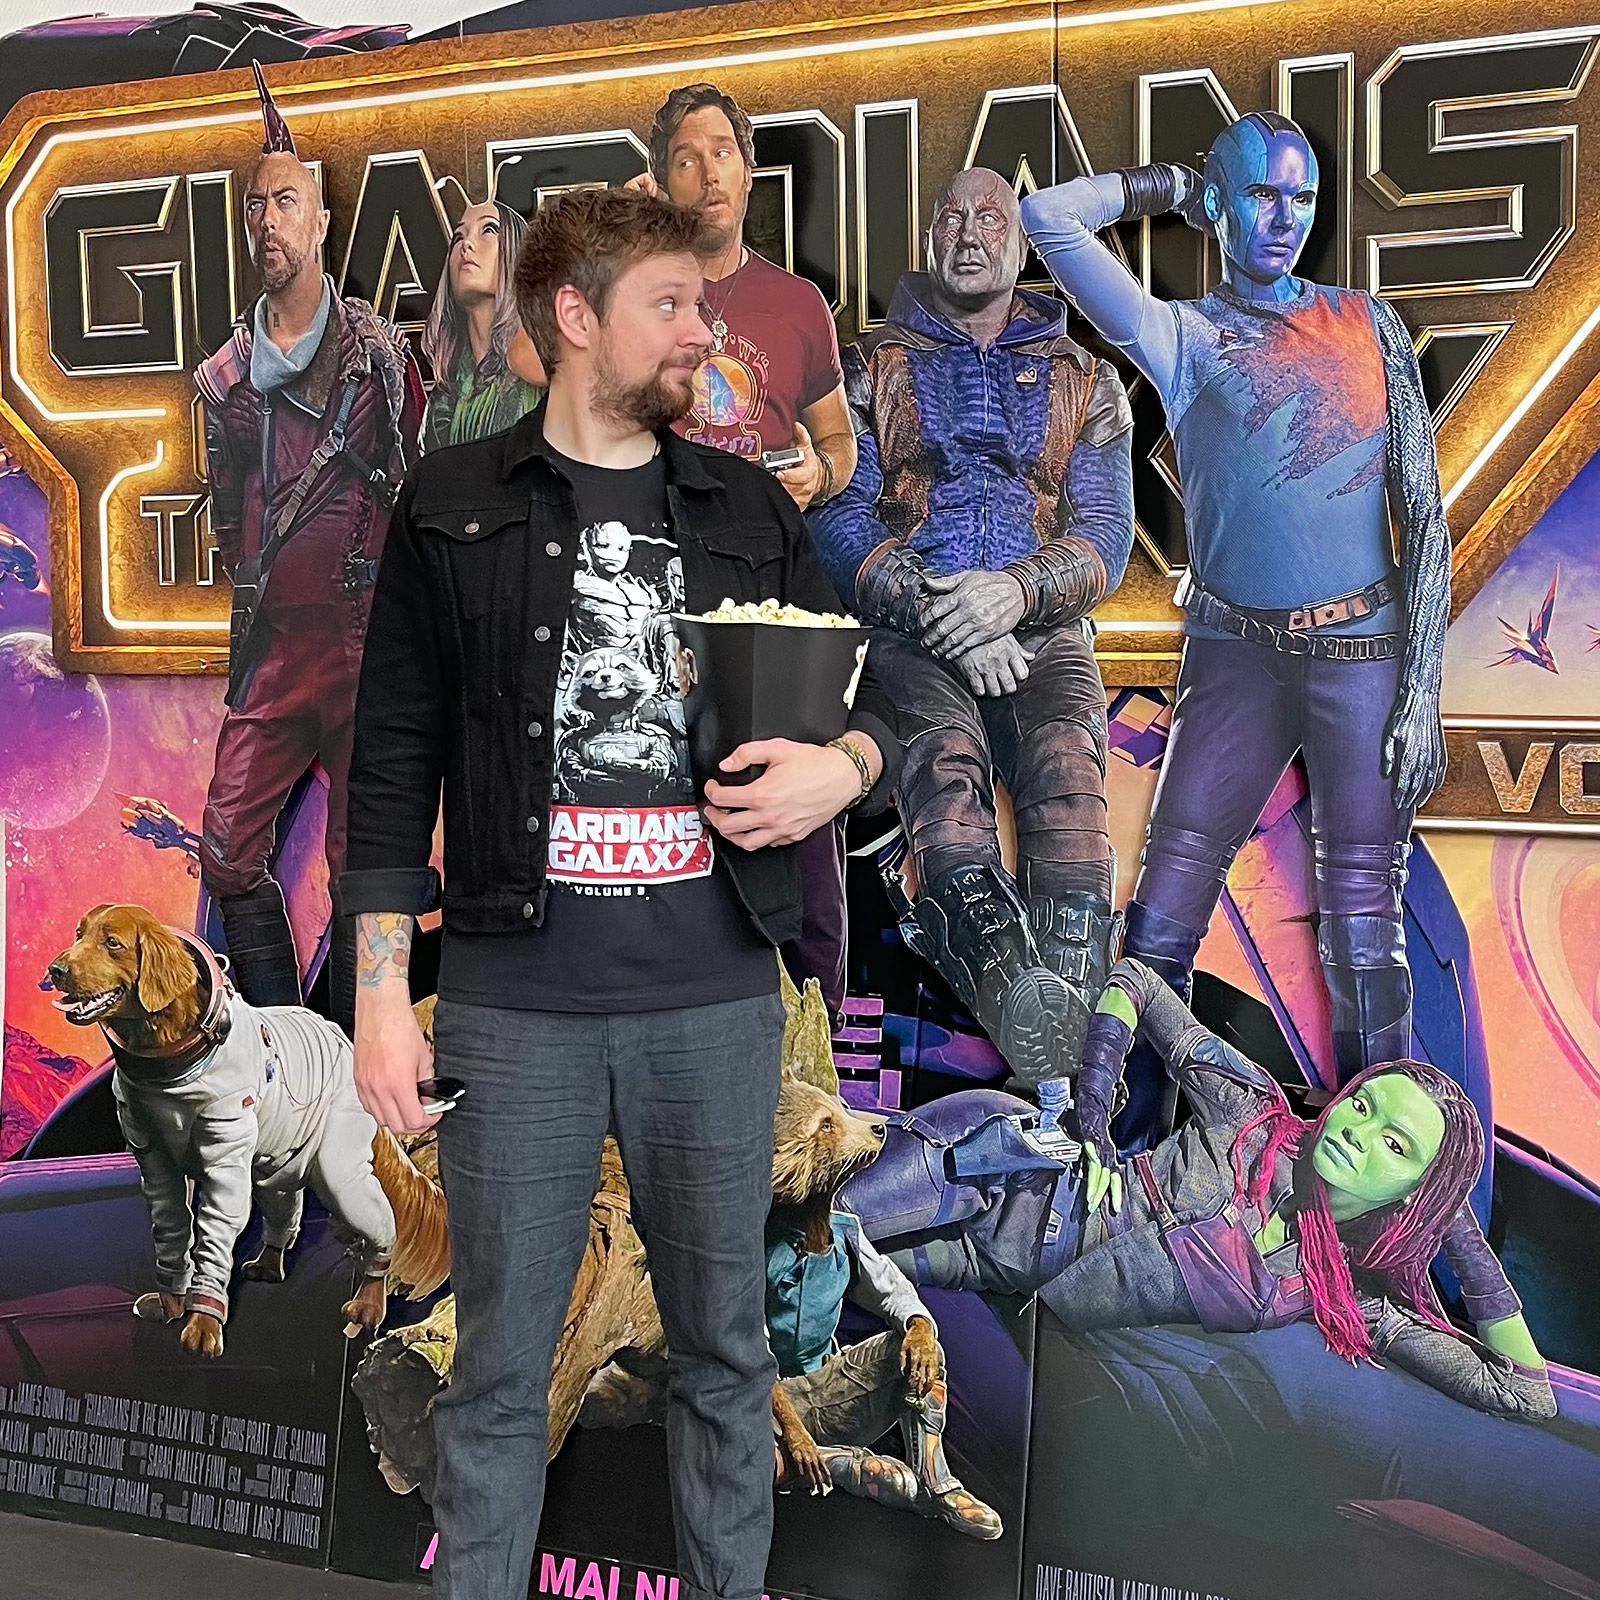 Guardians of the Galaxy - The Guardians Vol. 3 T-Shirt schwarz